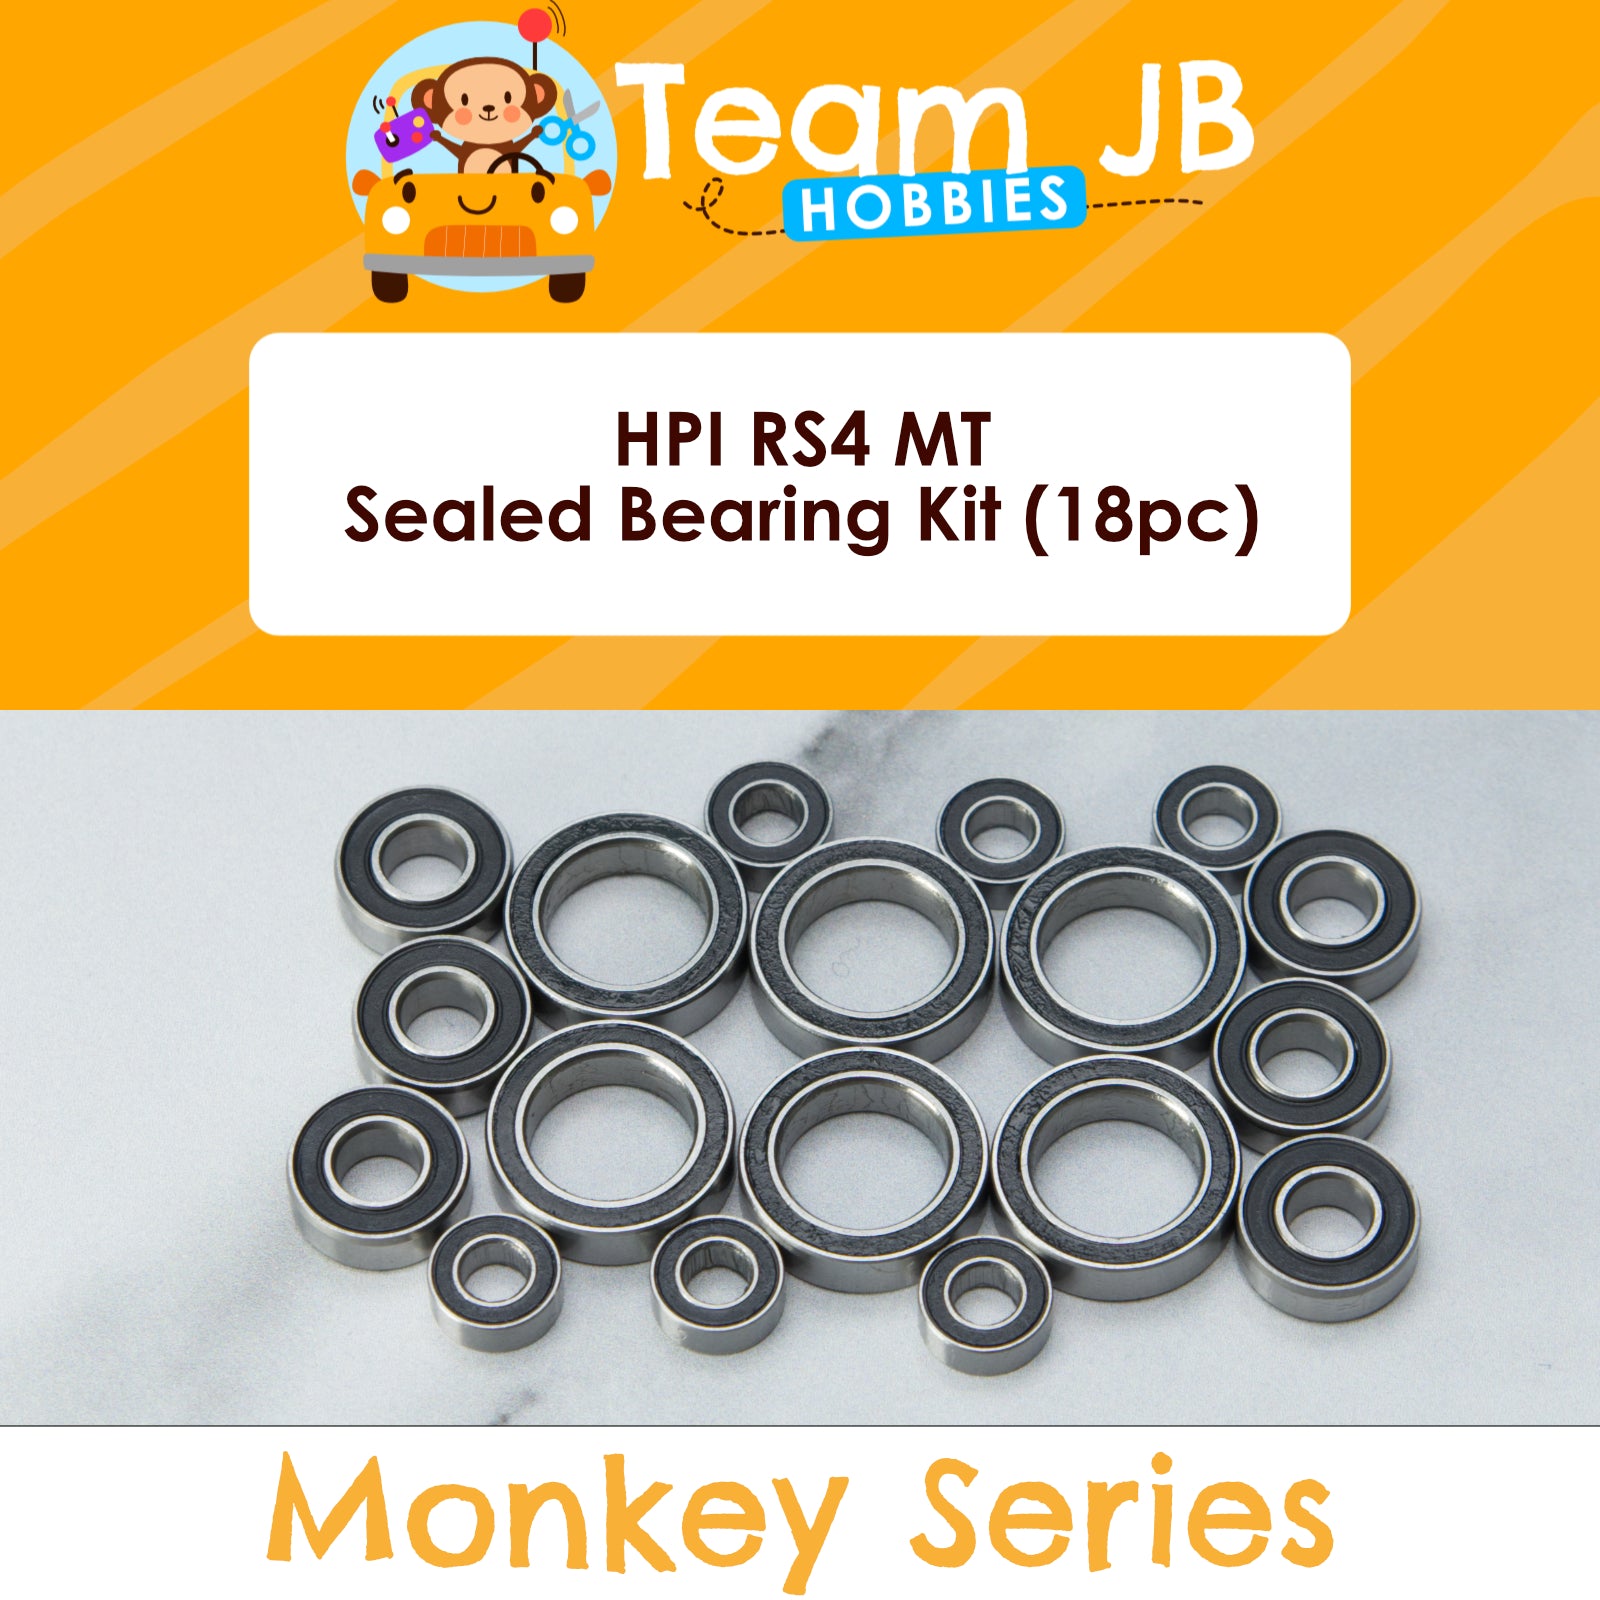 HPI RS4 MT - Sealed Bearing Kit